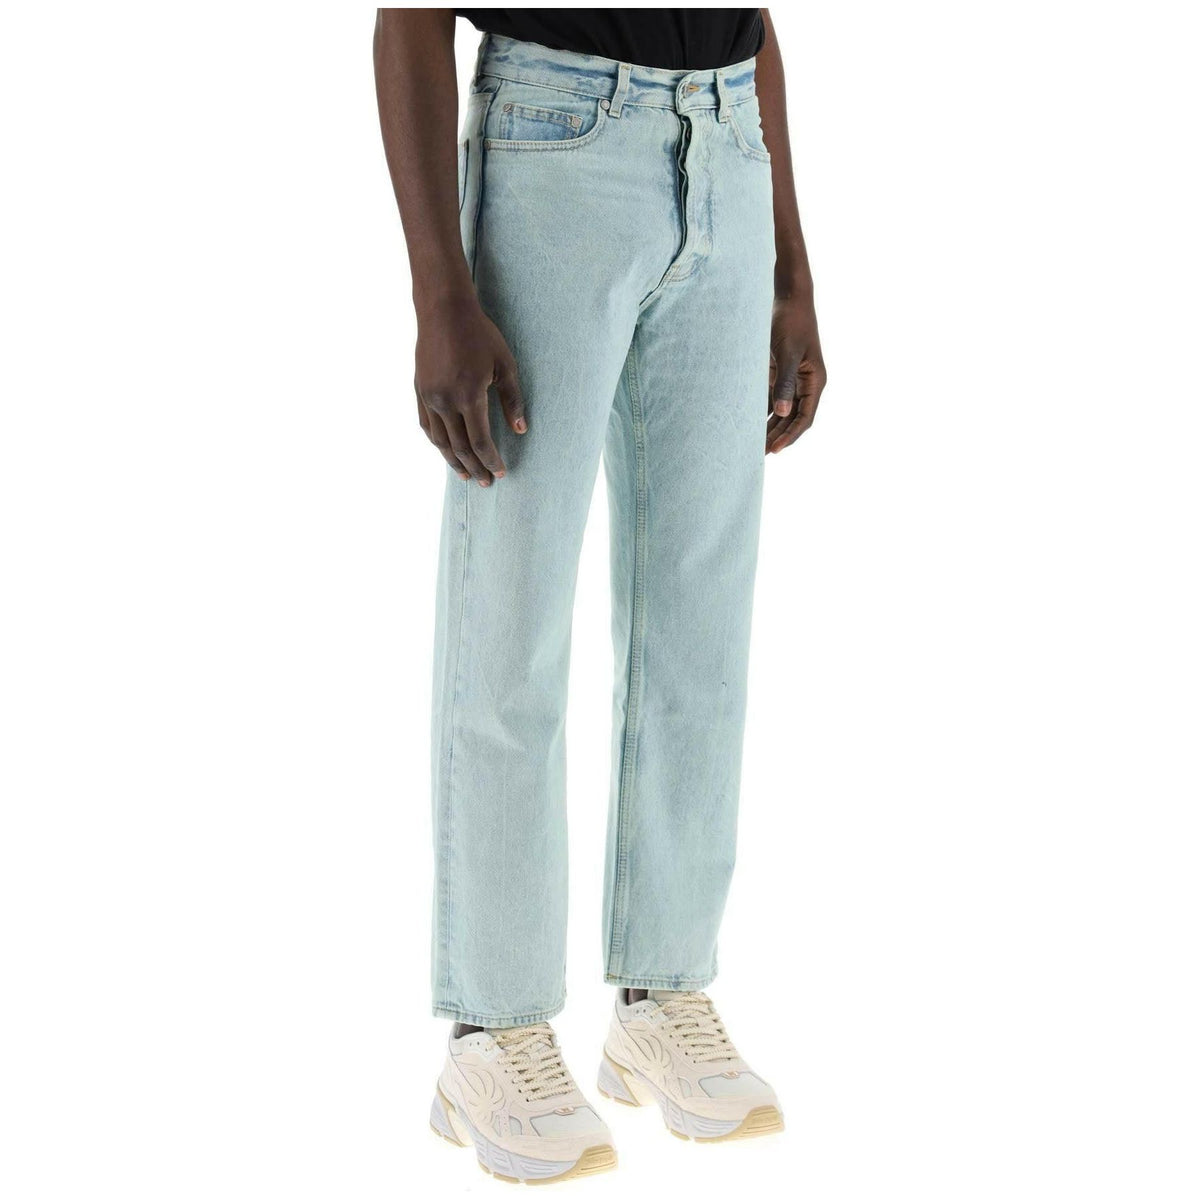 PALM ANGELS - Mint Off-White Denim Garment-Dyed Cotton Jeans - JOHN JULIA